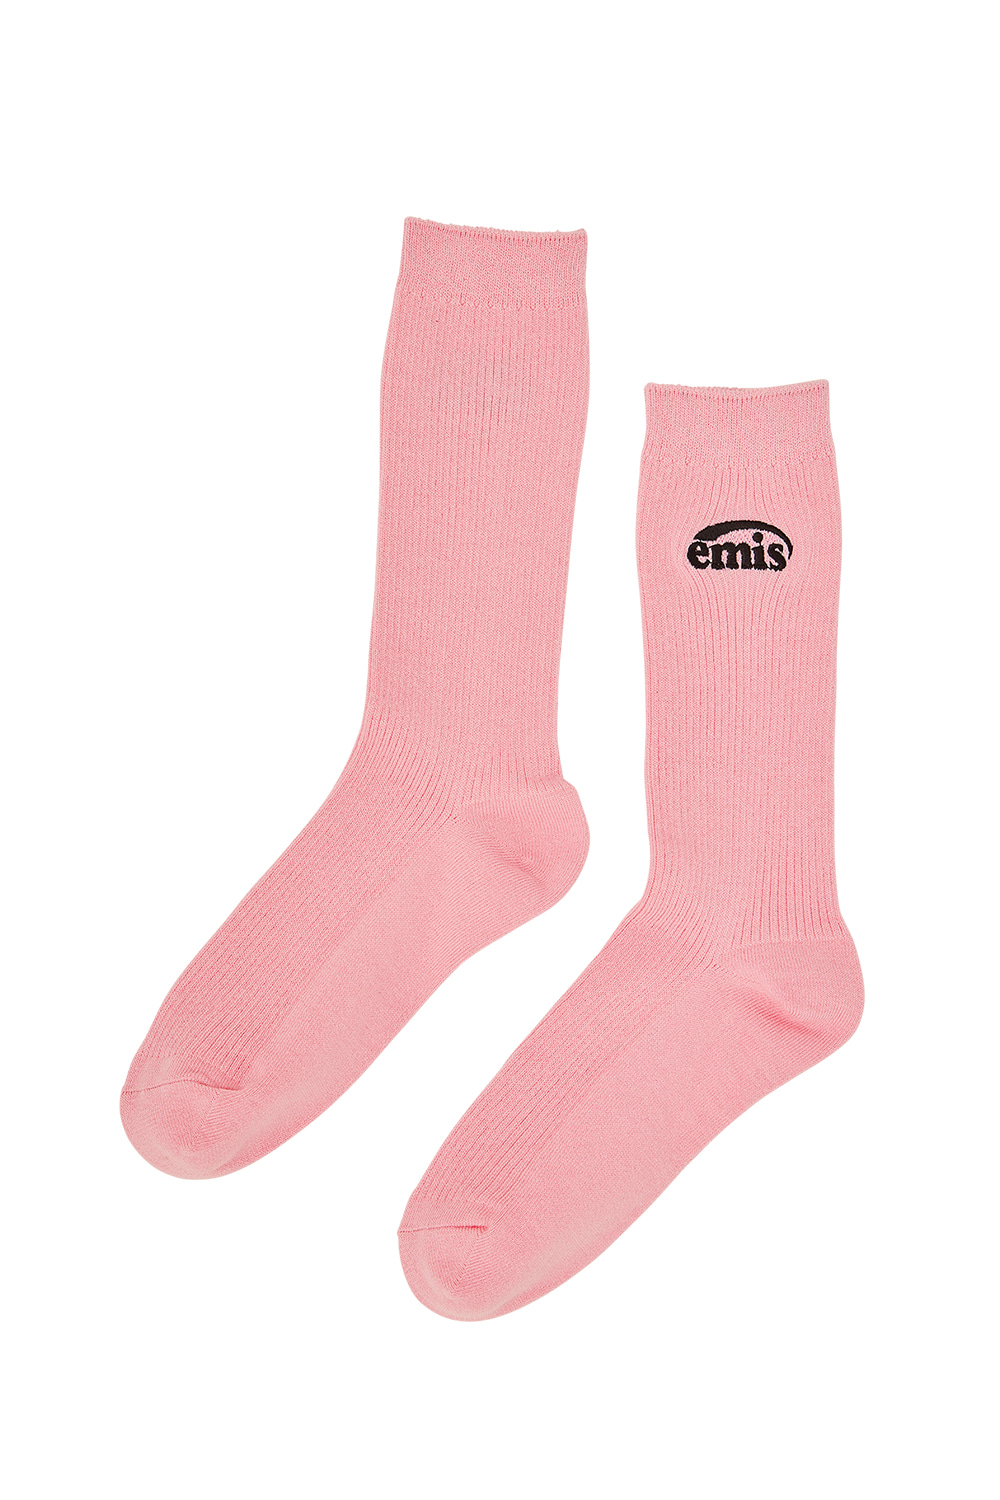 韓國EMIS - (WOMENS) NEW LOGO STITCH SOCKS-PINK（女式）新款 LOGO 縫線襪-粉紅色